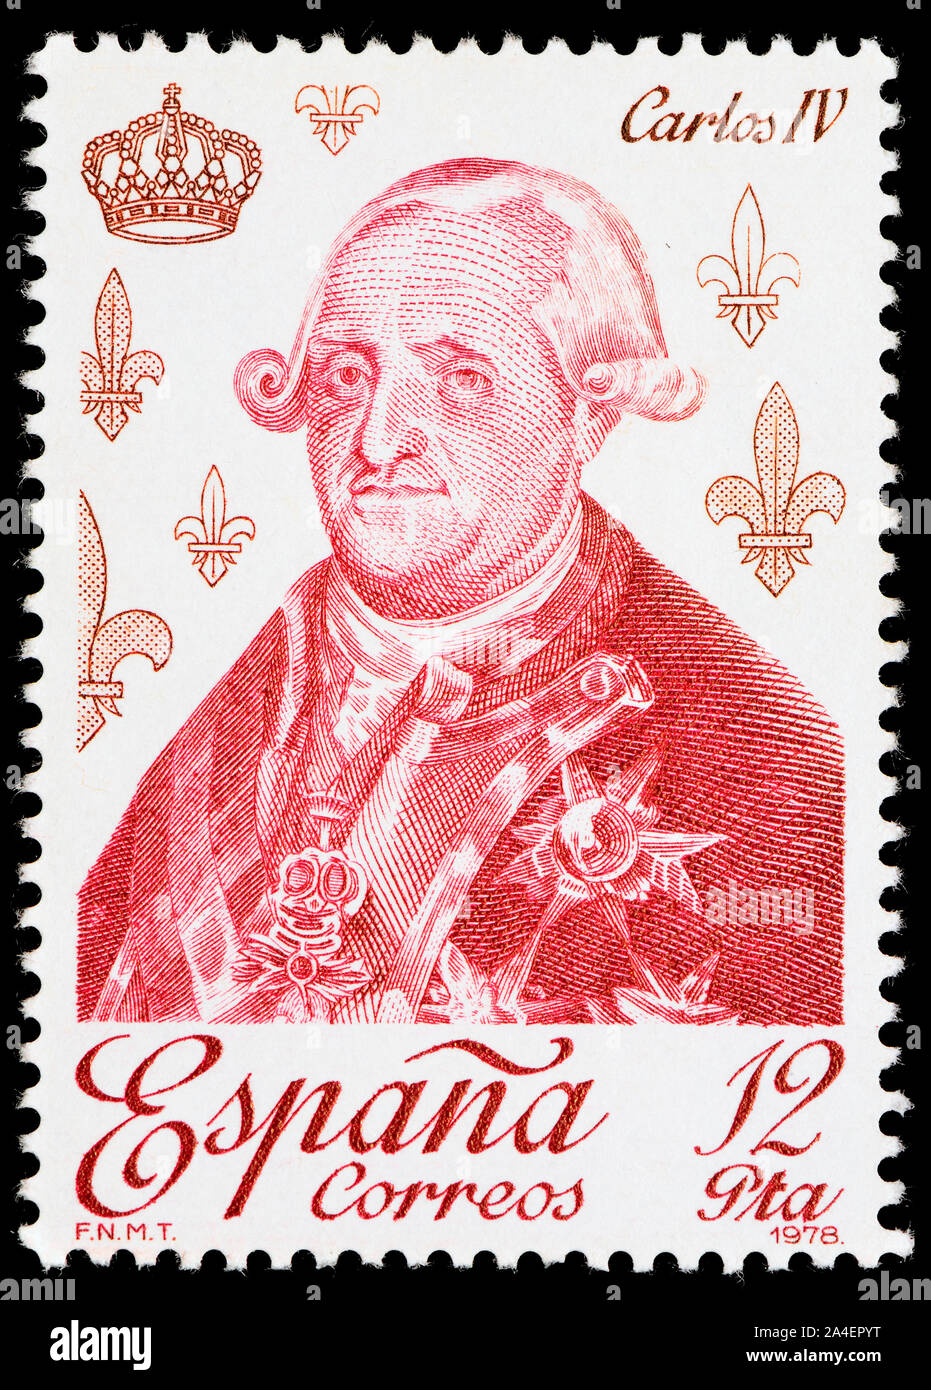 Spanish postage stamp (1978) : King Carlos IV of Spain Stock Photo